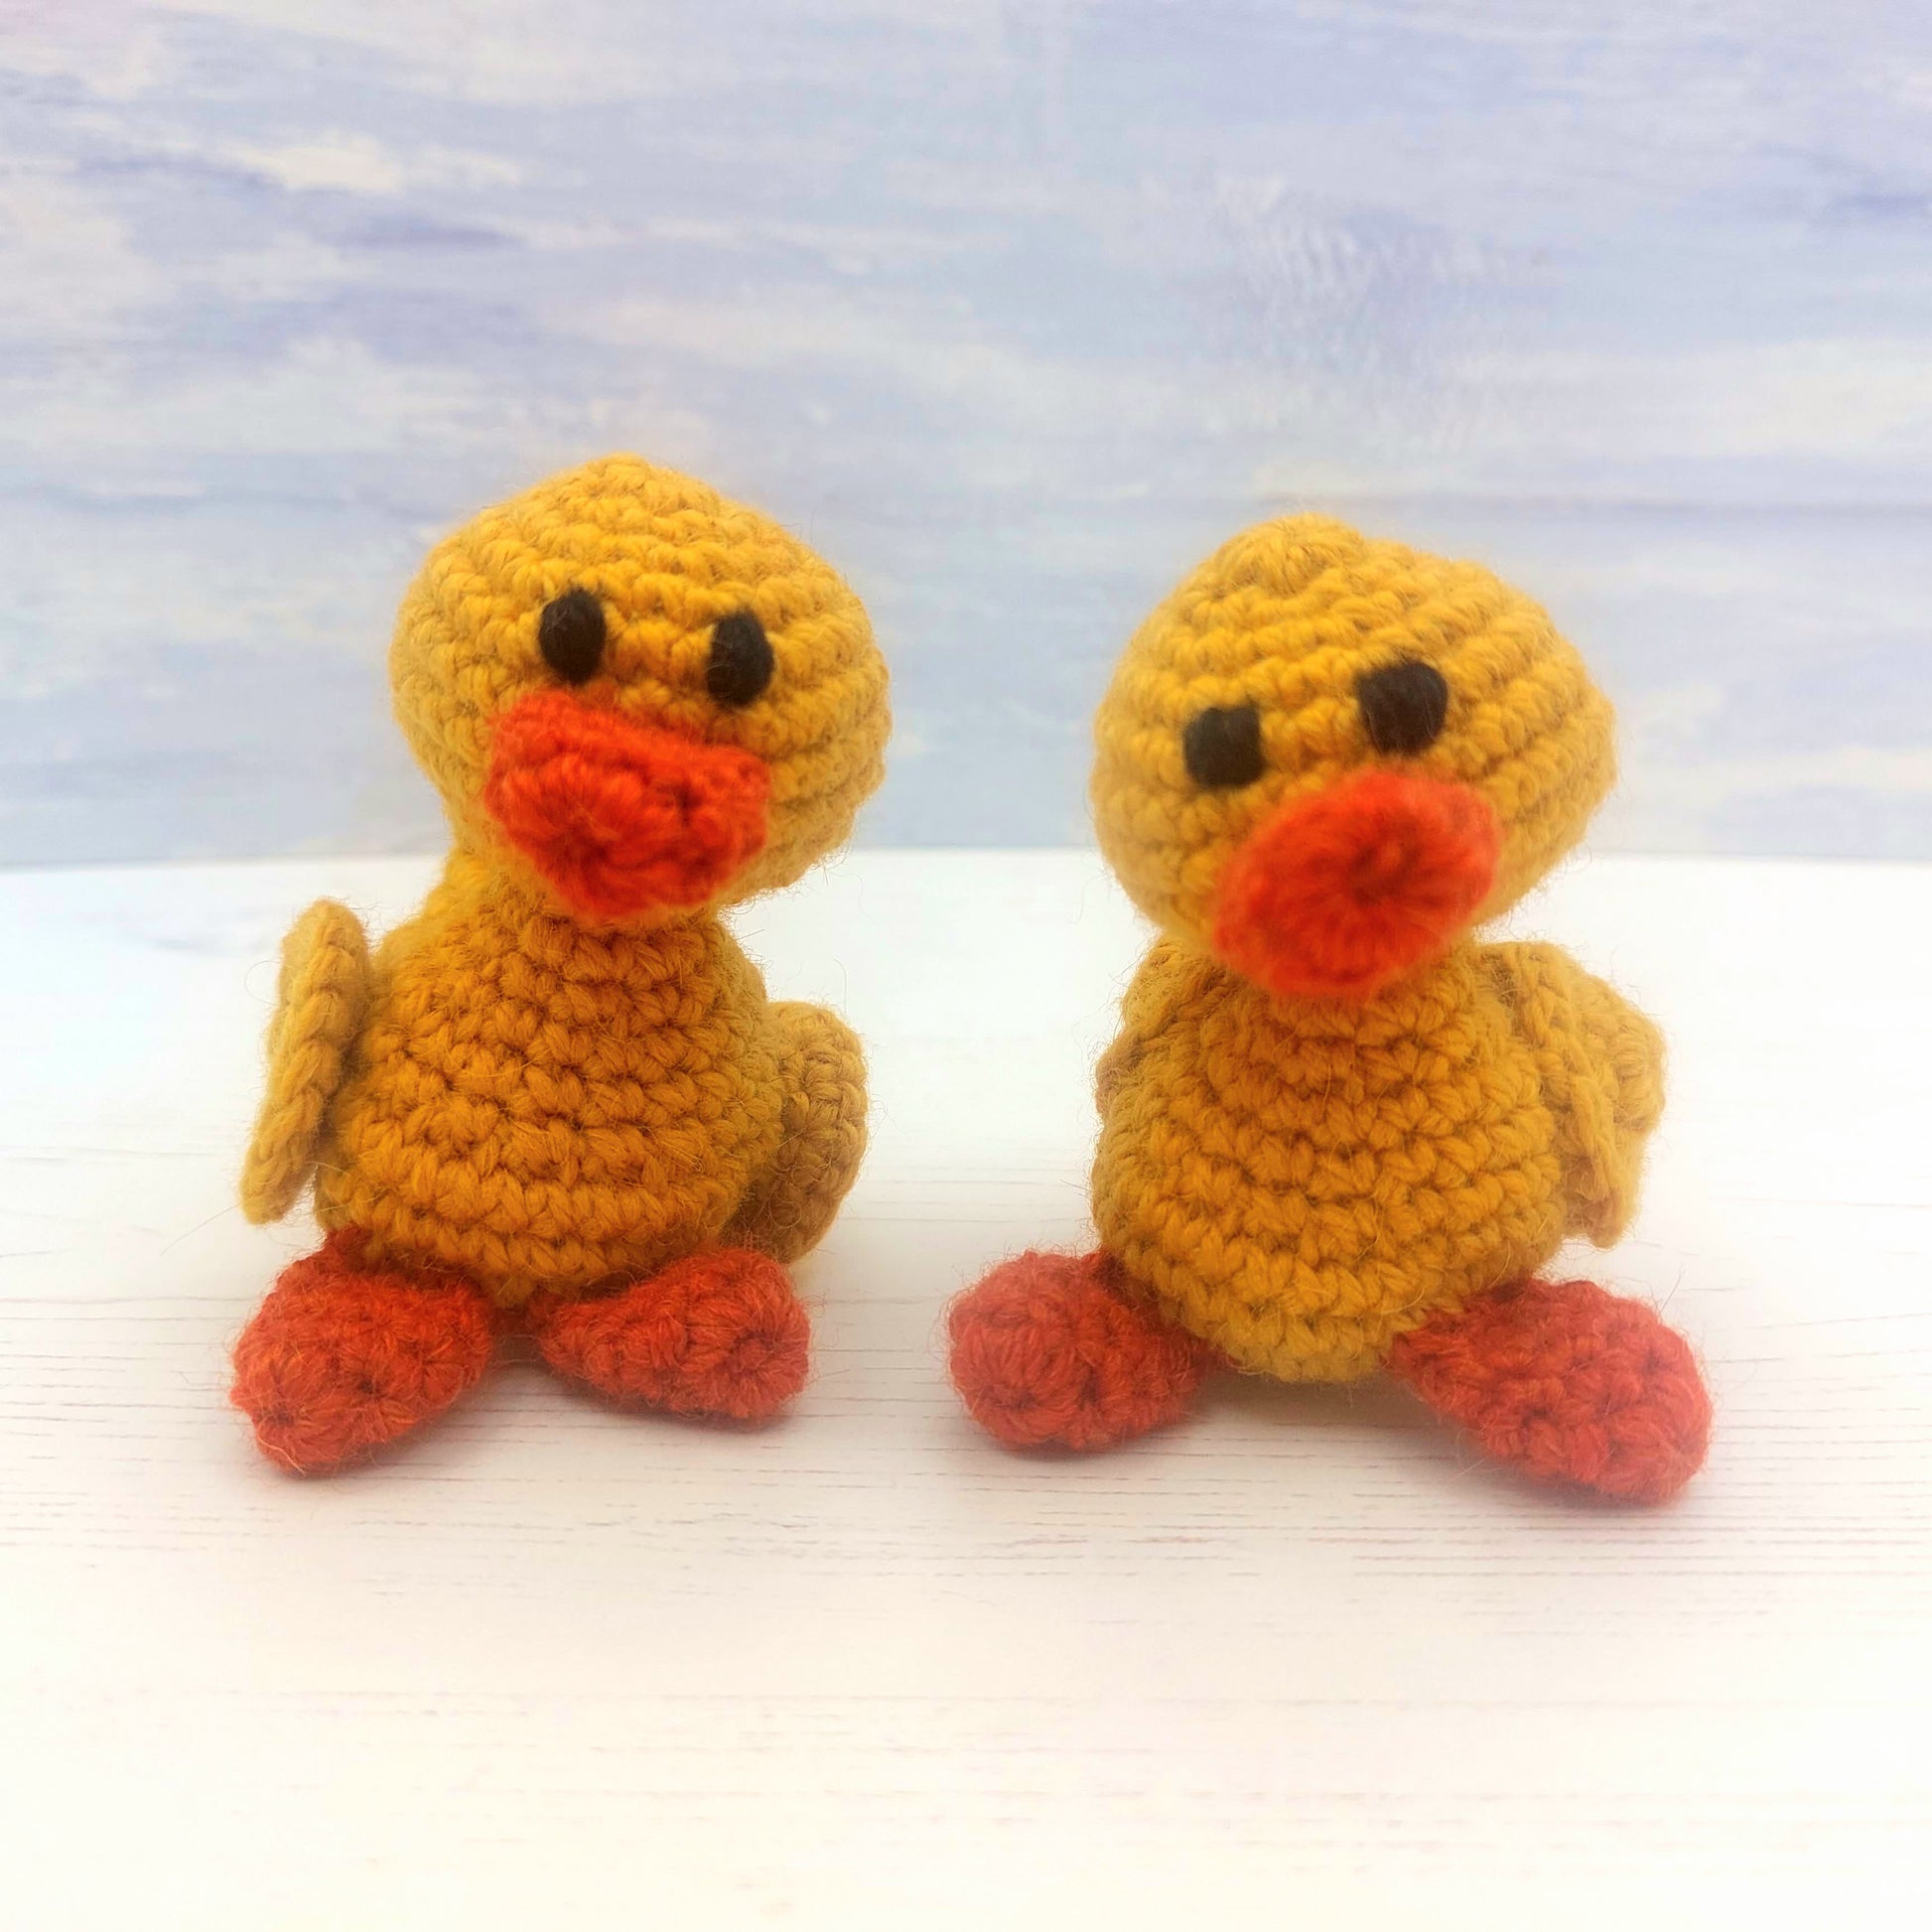 Two Crochet Chicks